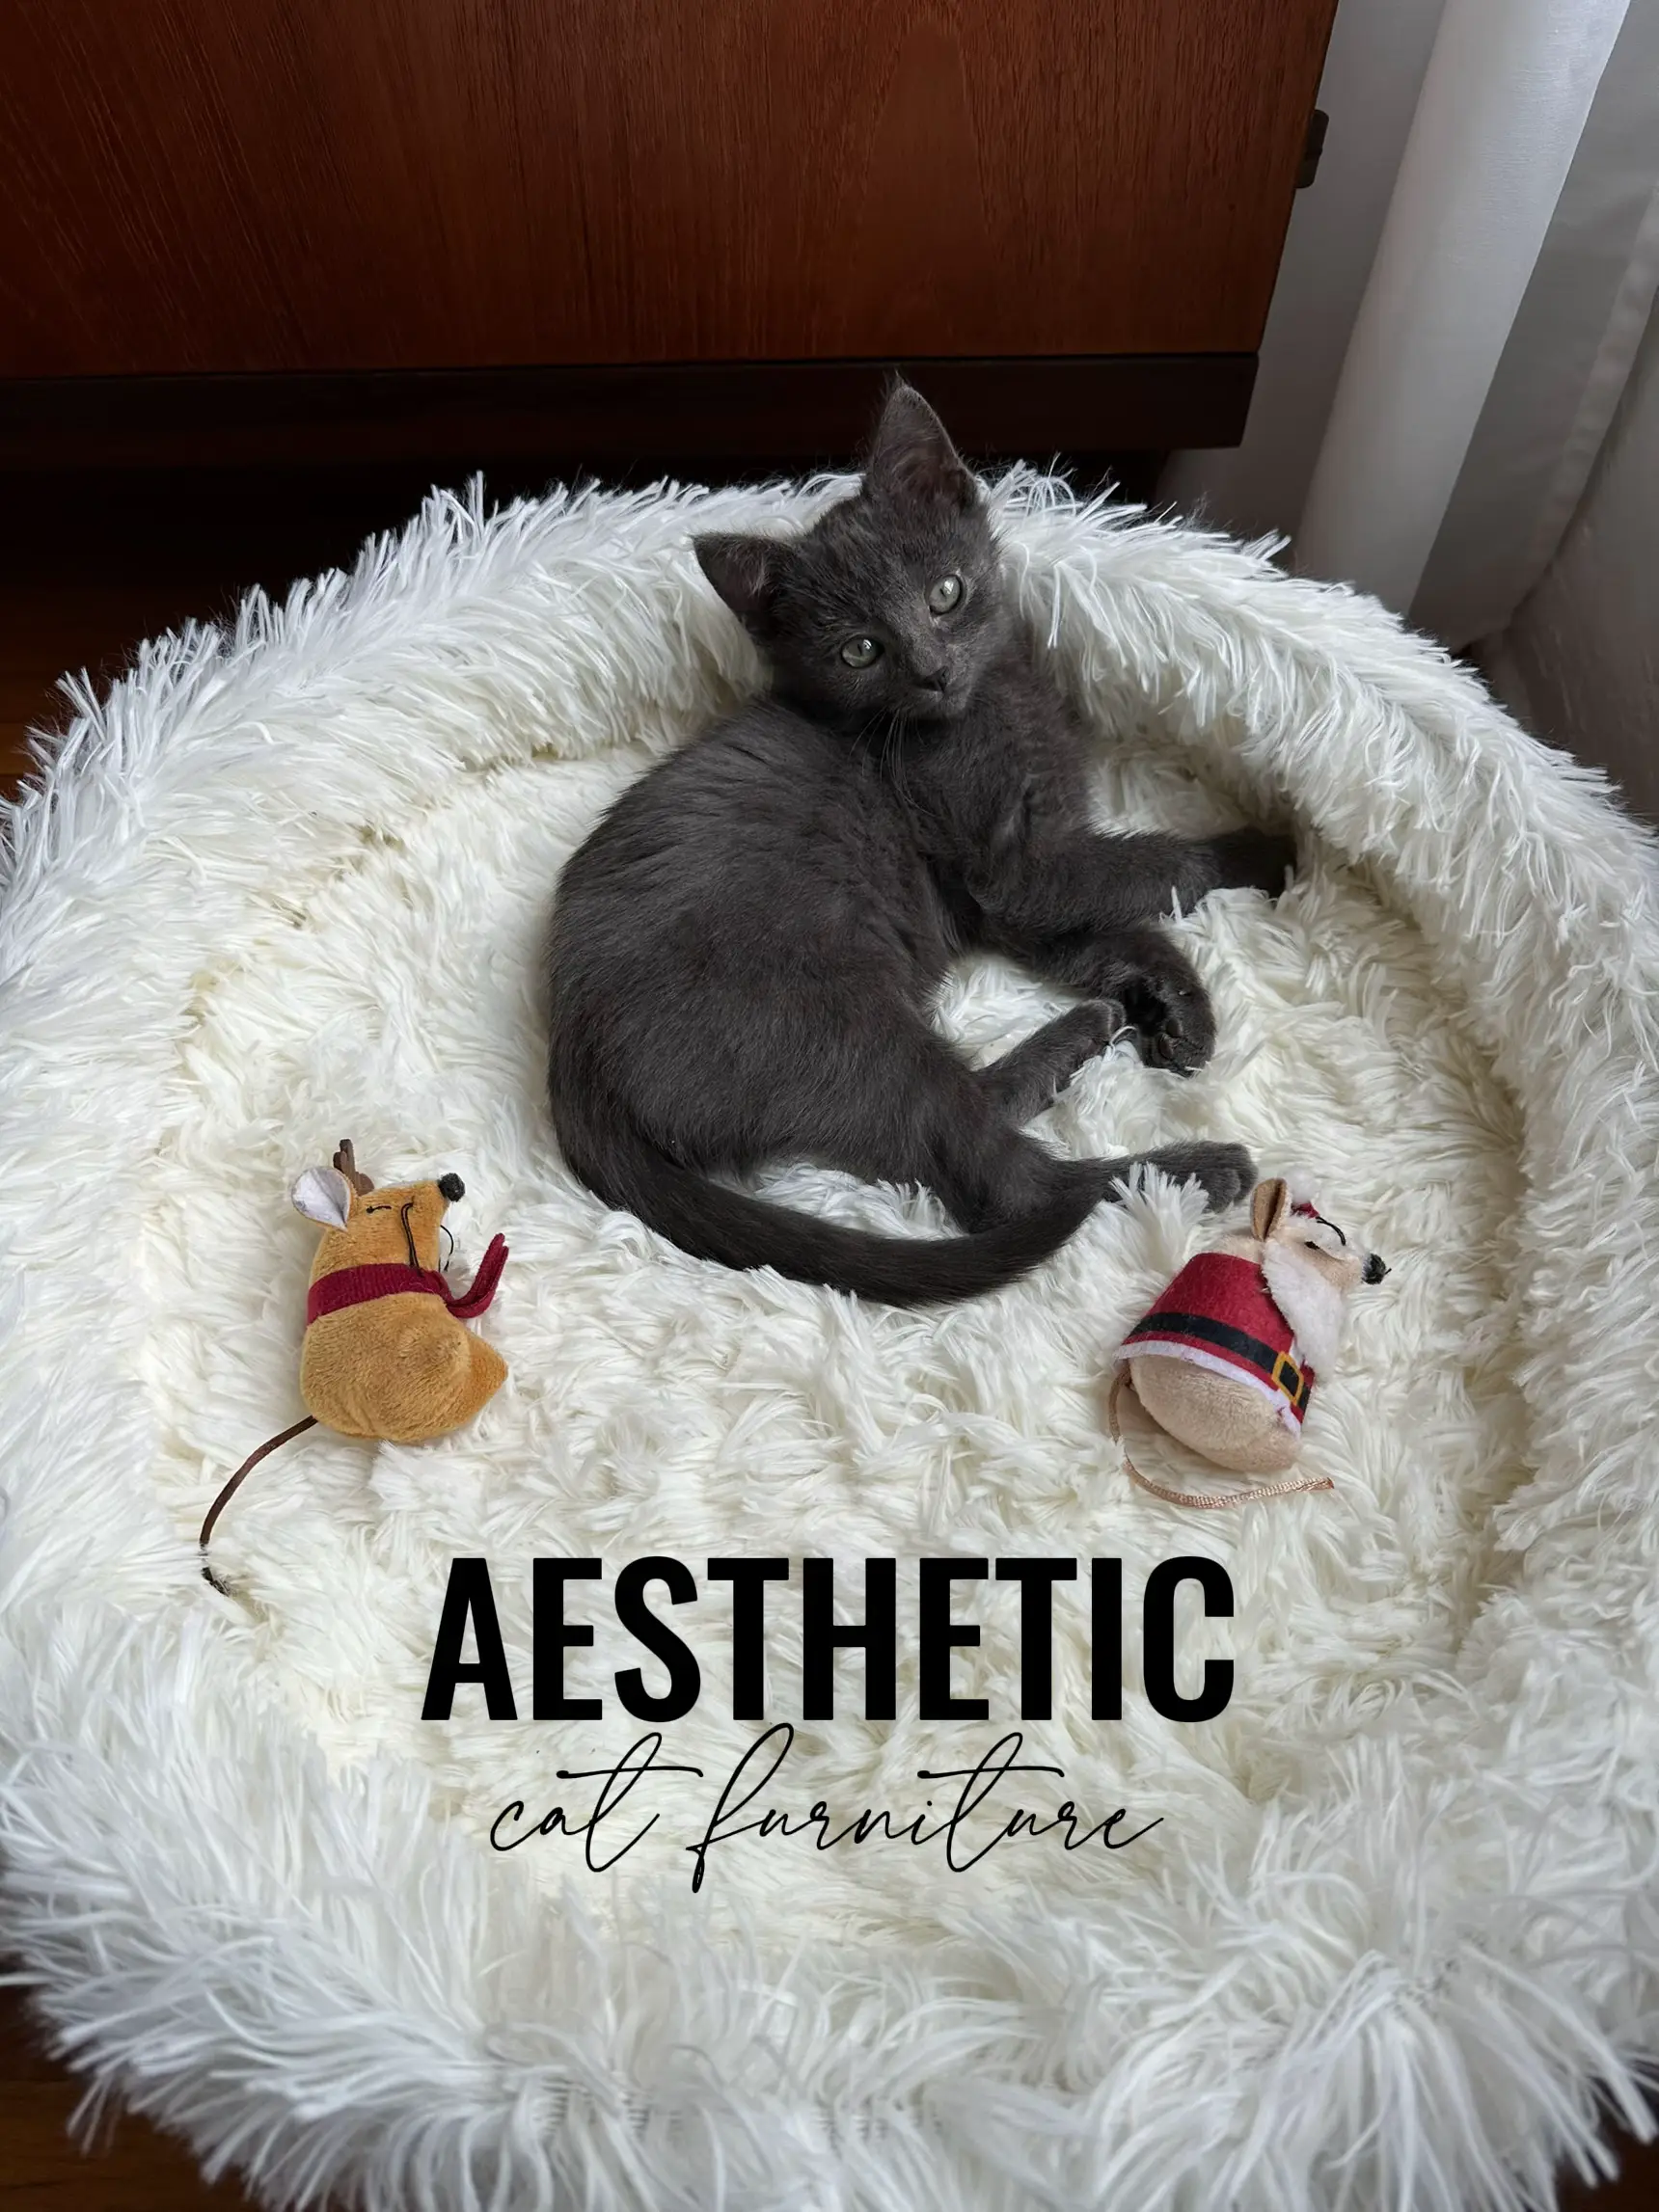 cat aesthetics - Lemon8 Search